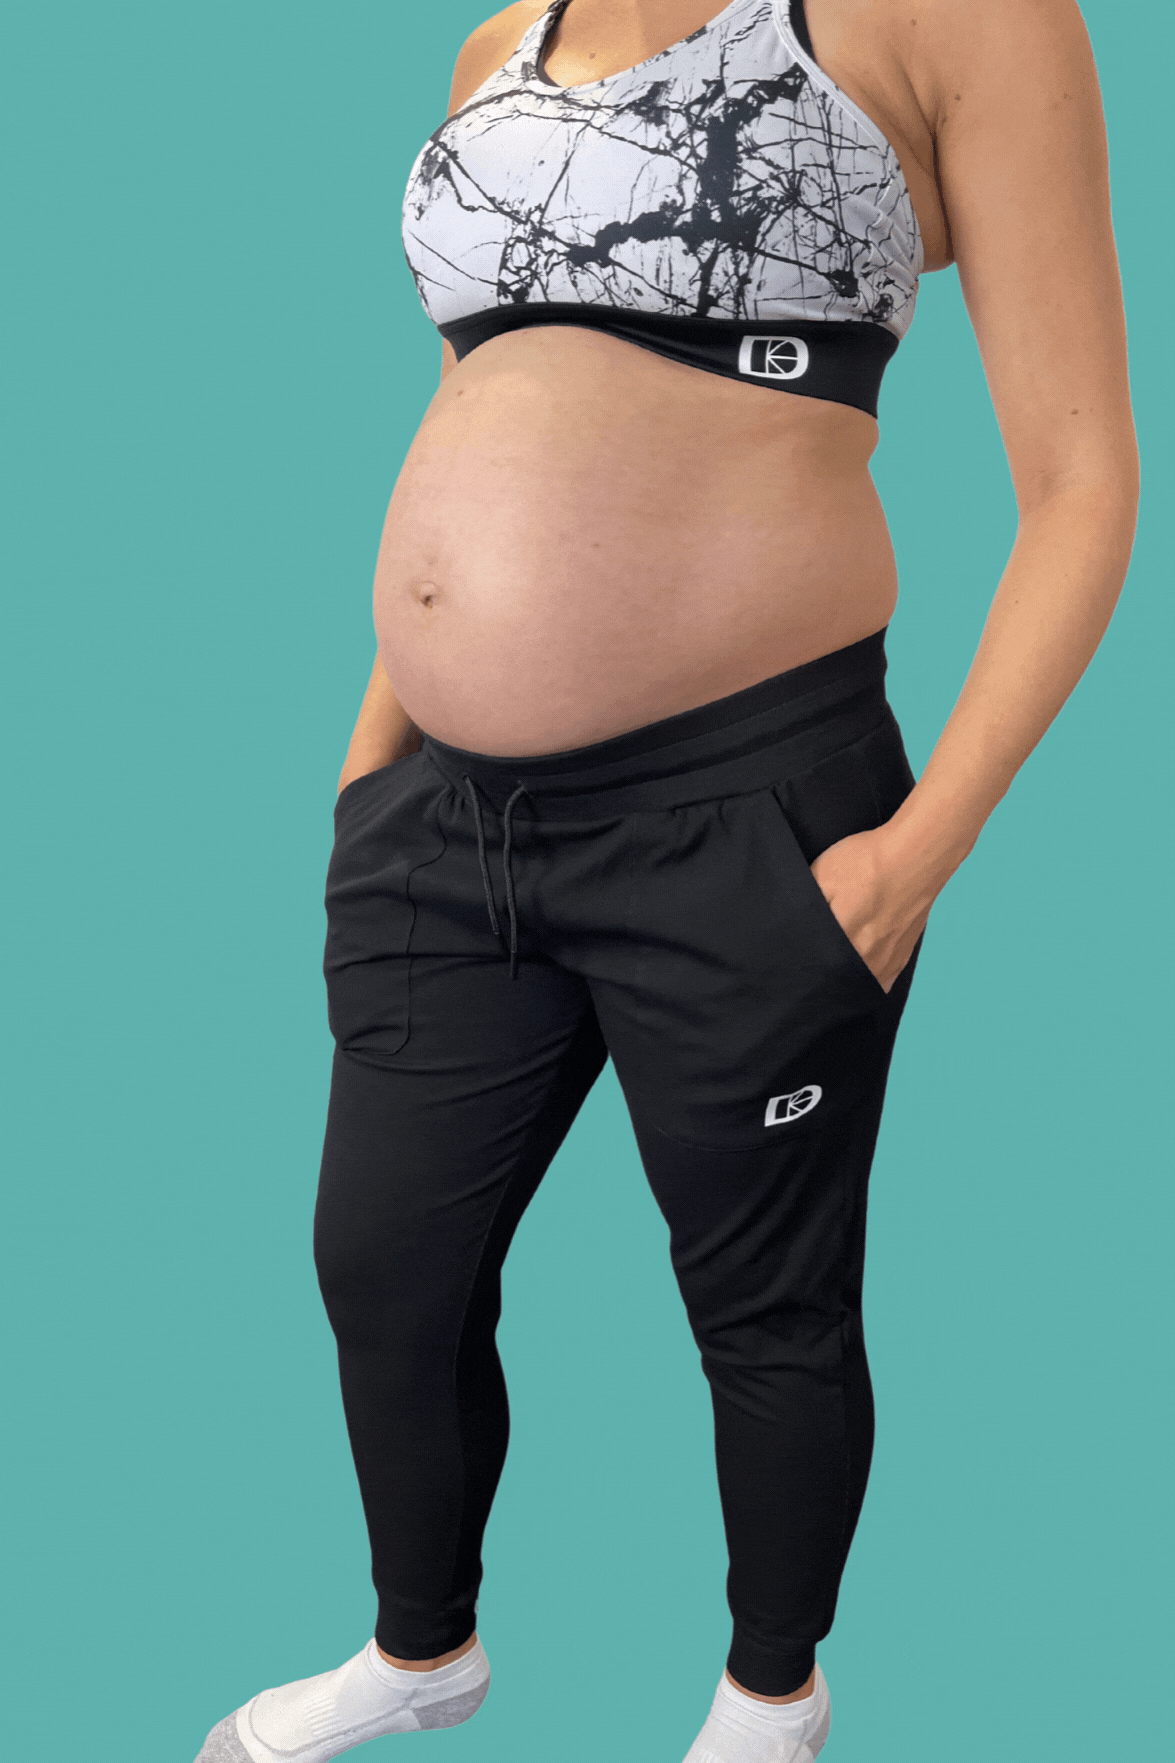 Black jogging bottoms maternity over bump with detachable bump panel